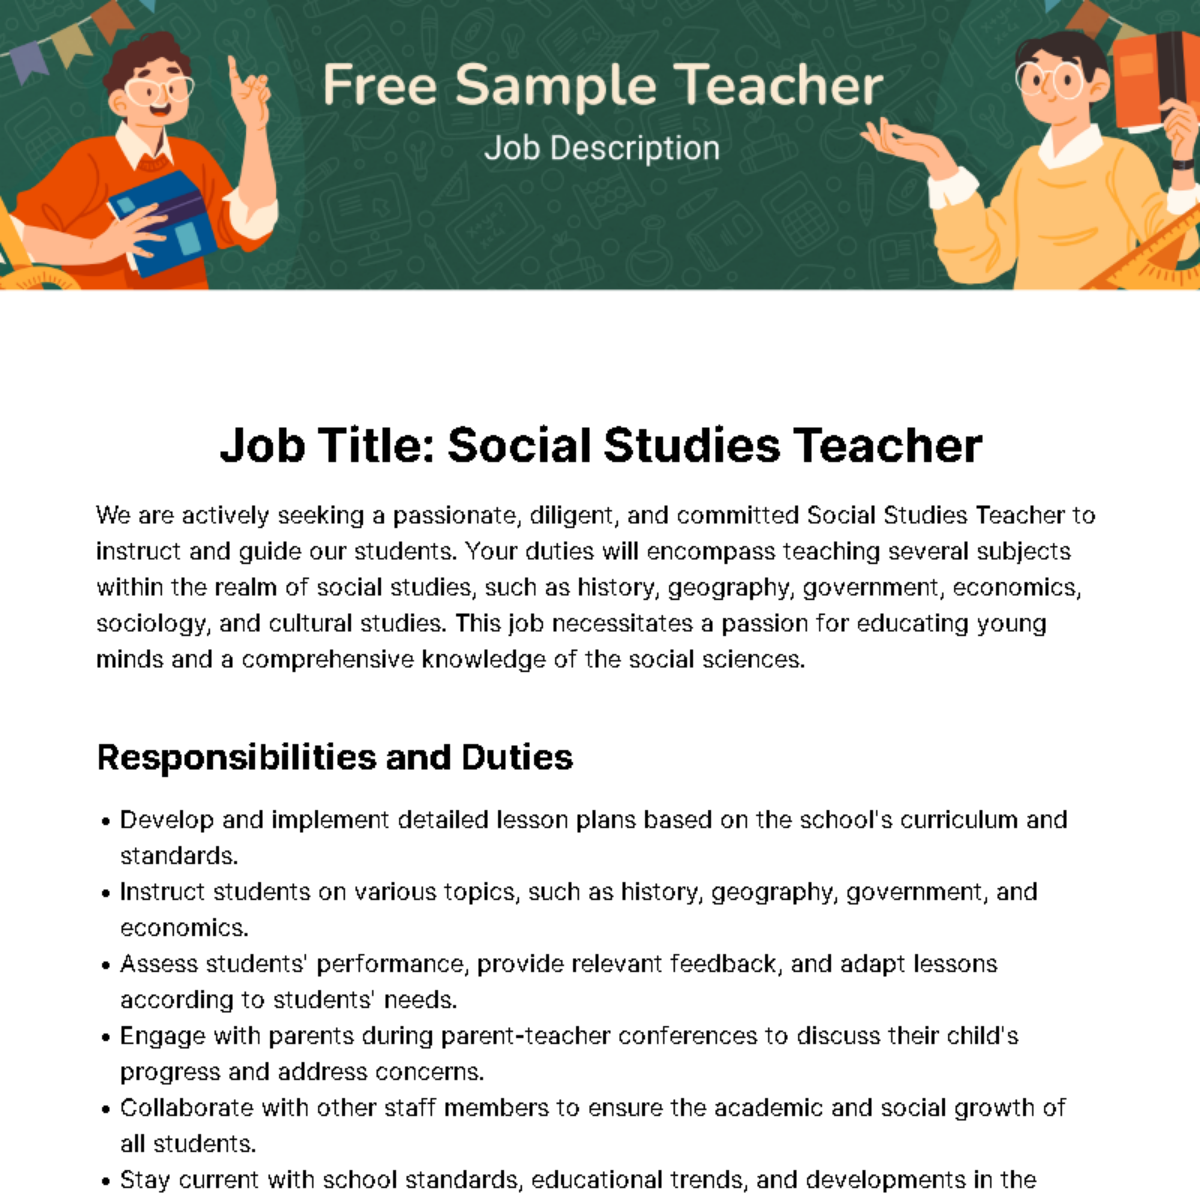 Free Sample Teacher Job Description Template